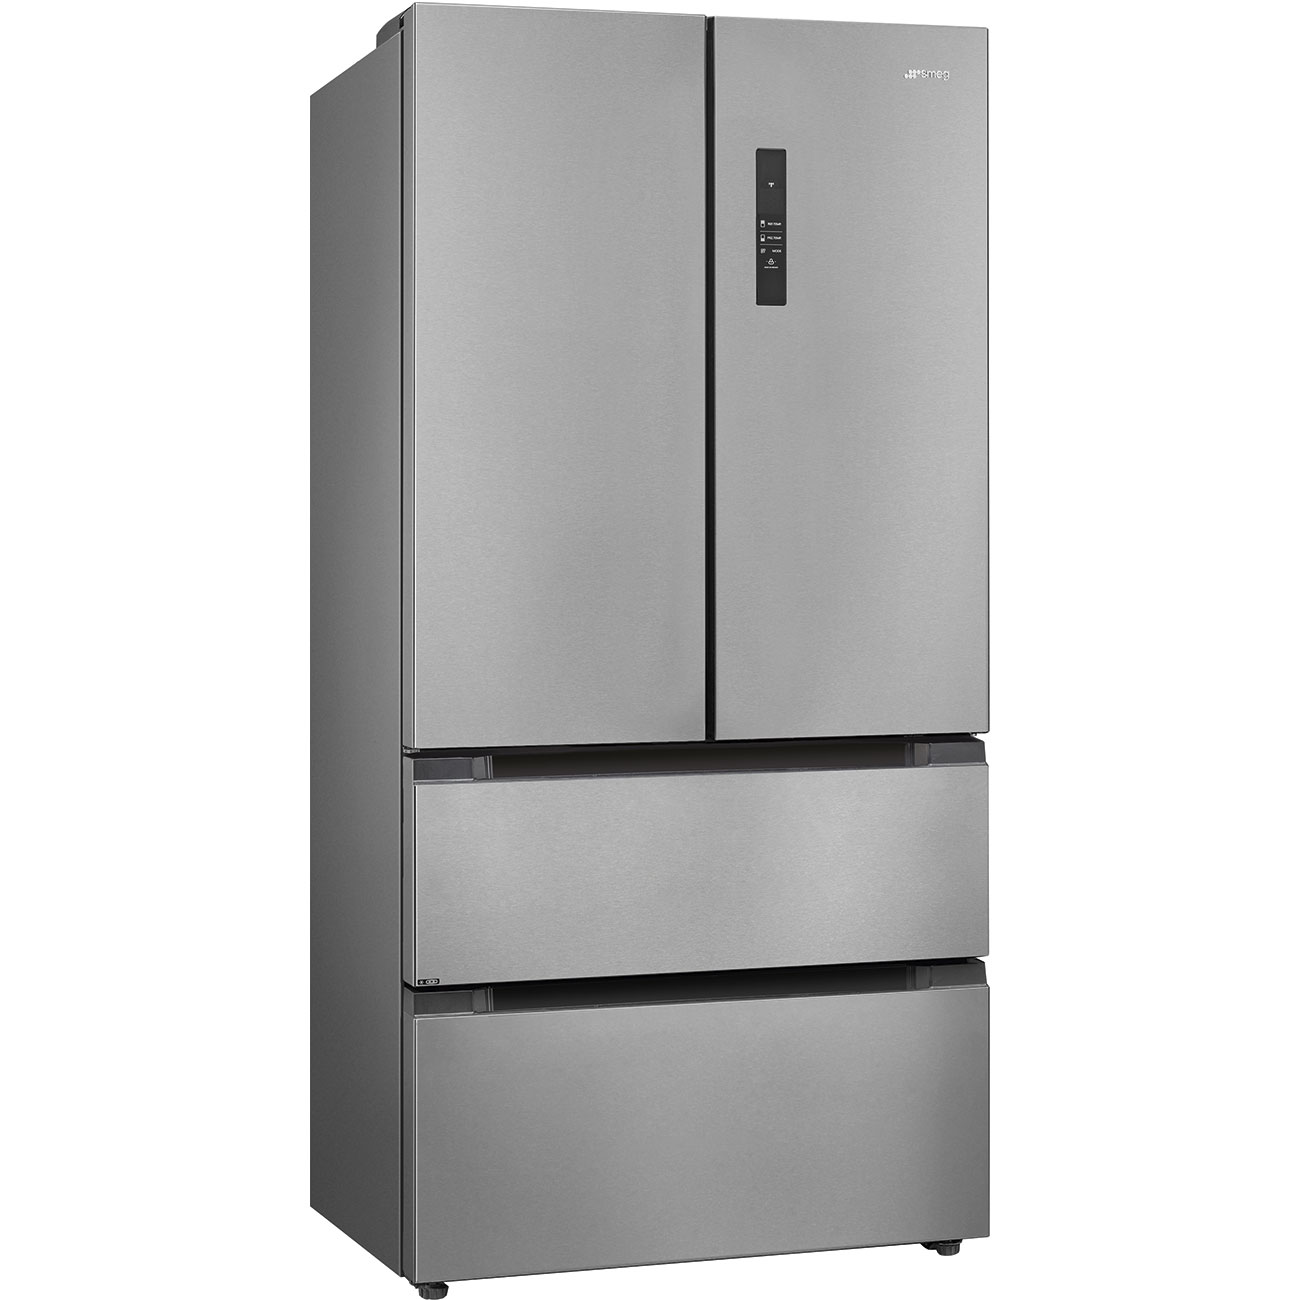 2 Doors & 2 Drawers Free standing refrigerator - Smeg_1